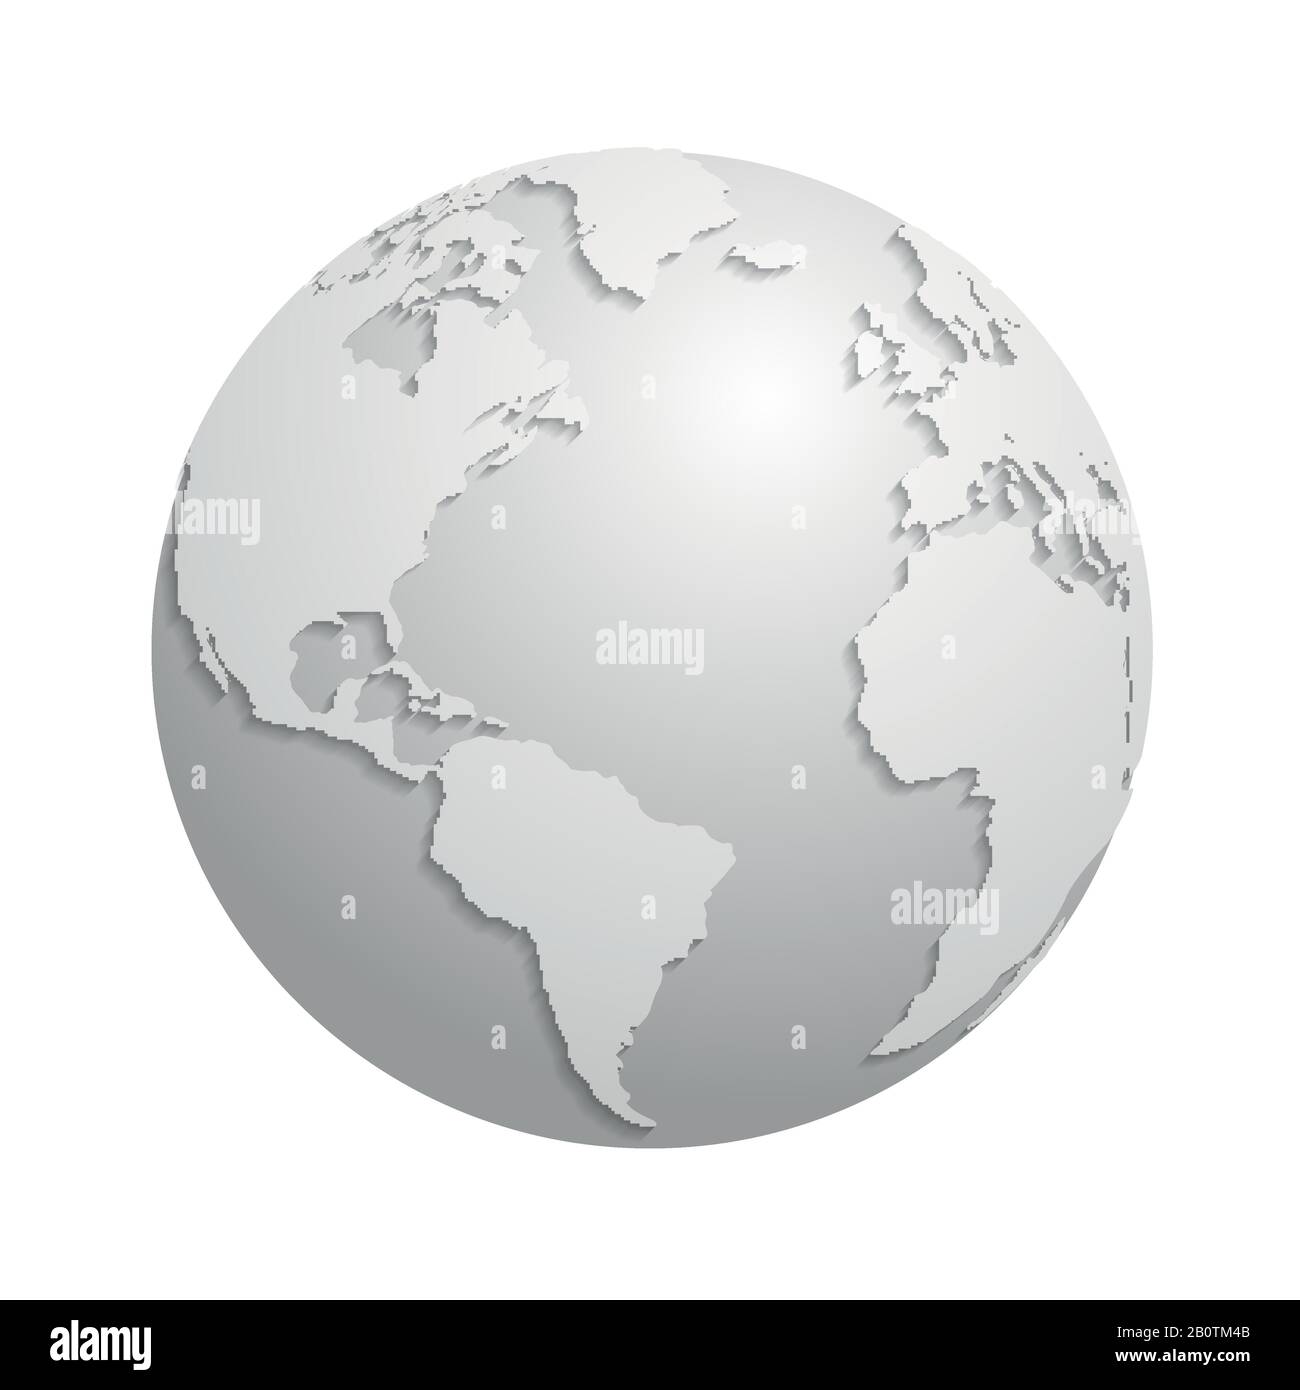 Origami white paper world globe. 3d vector illustration global earth map, origami planet sphere Stock Vector